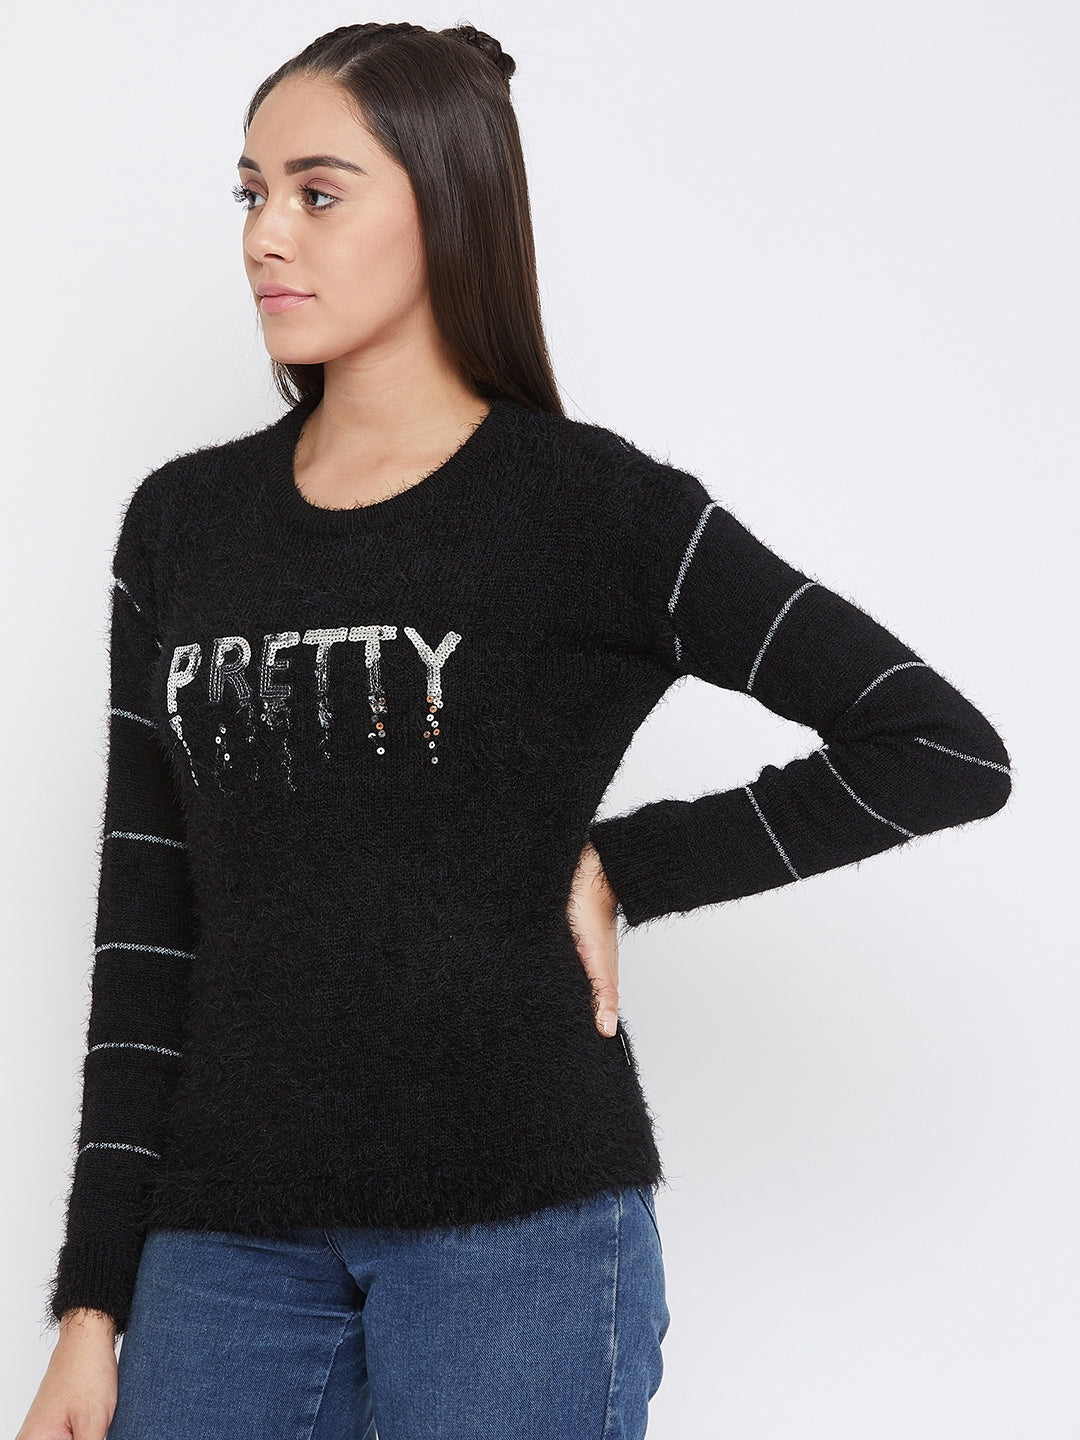 Black Printed Slim Fit Sweater Top - Women Sweaters